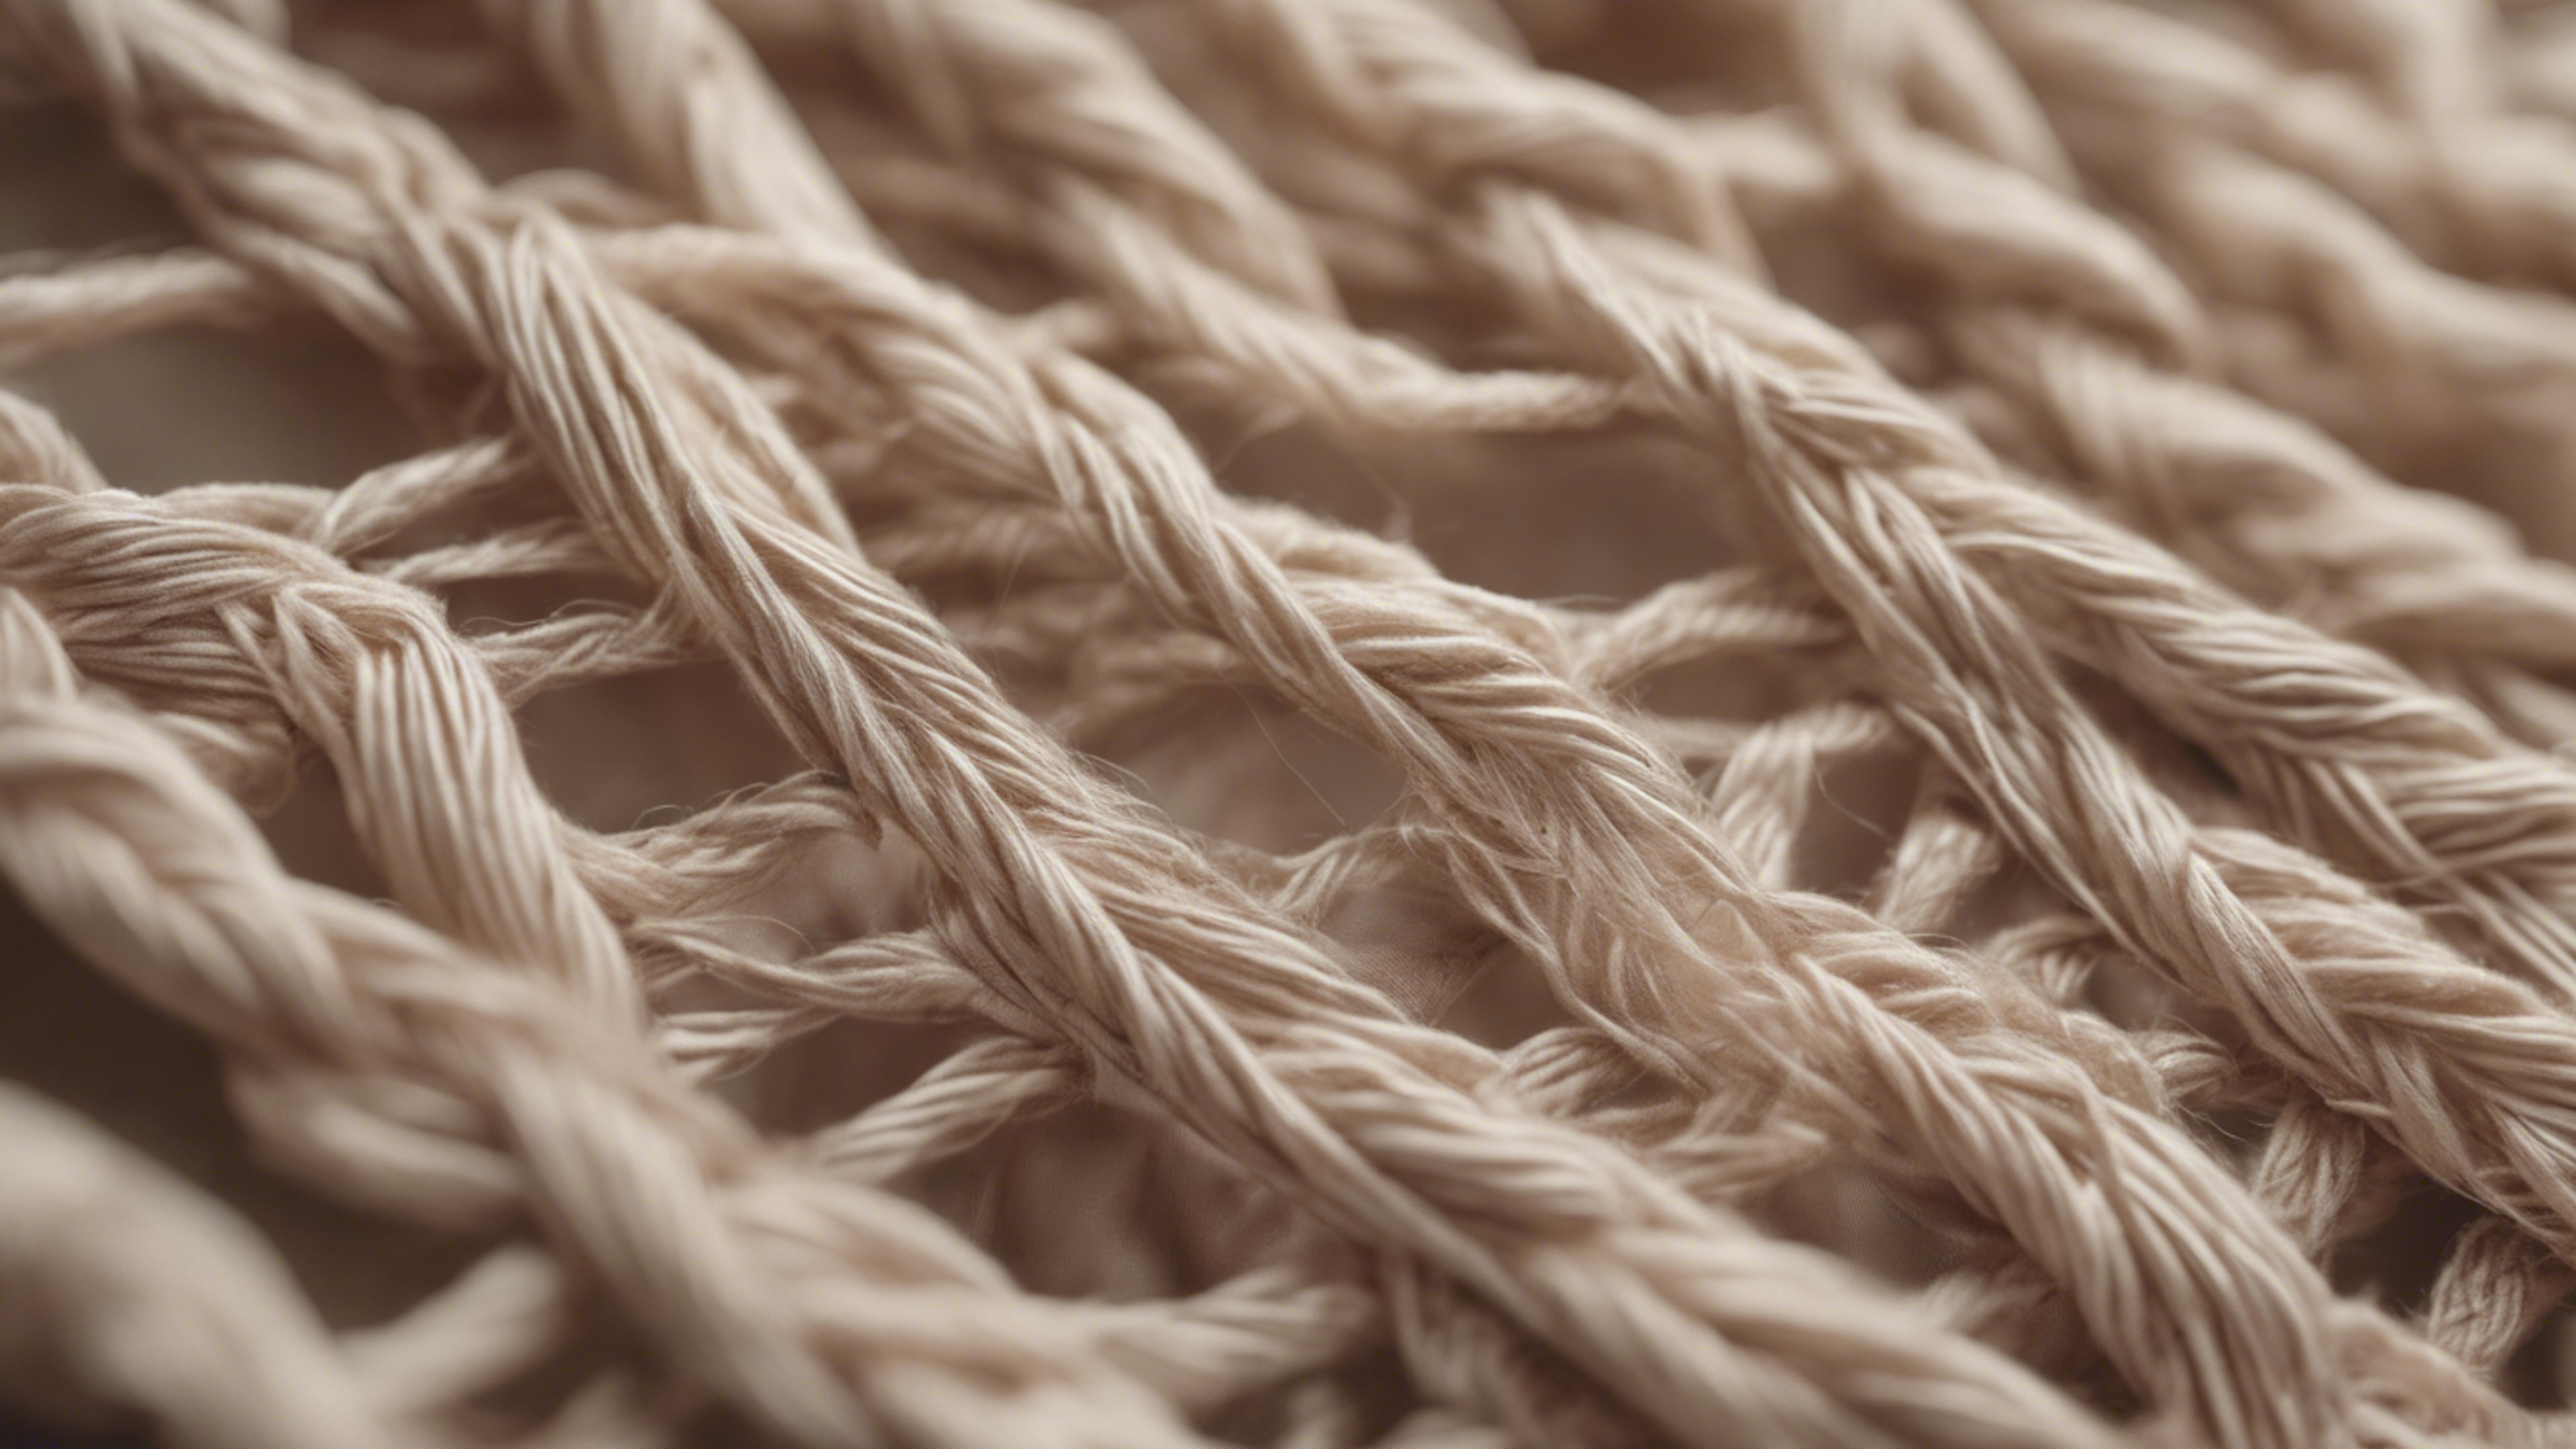 A close-up of cool beige threads interweaving to form a unique, patterned fabric. Papel de parede[e47f0bd142b54d48a5a0]